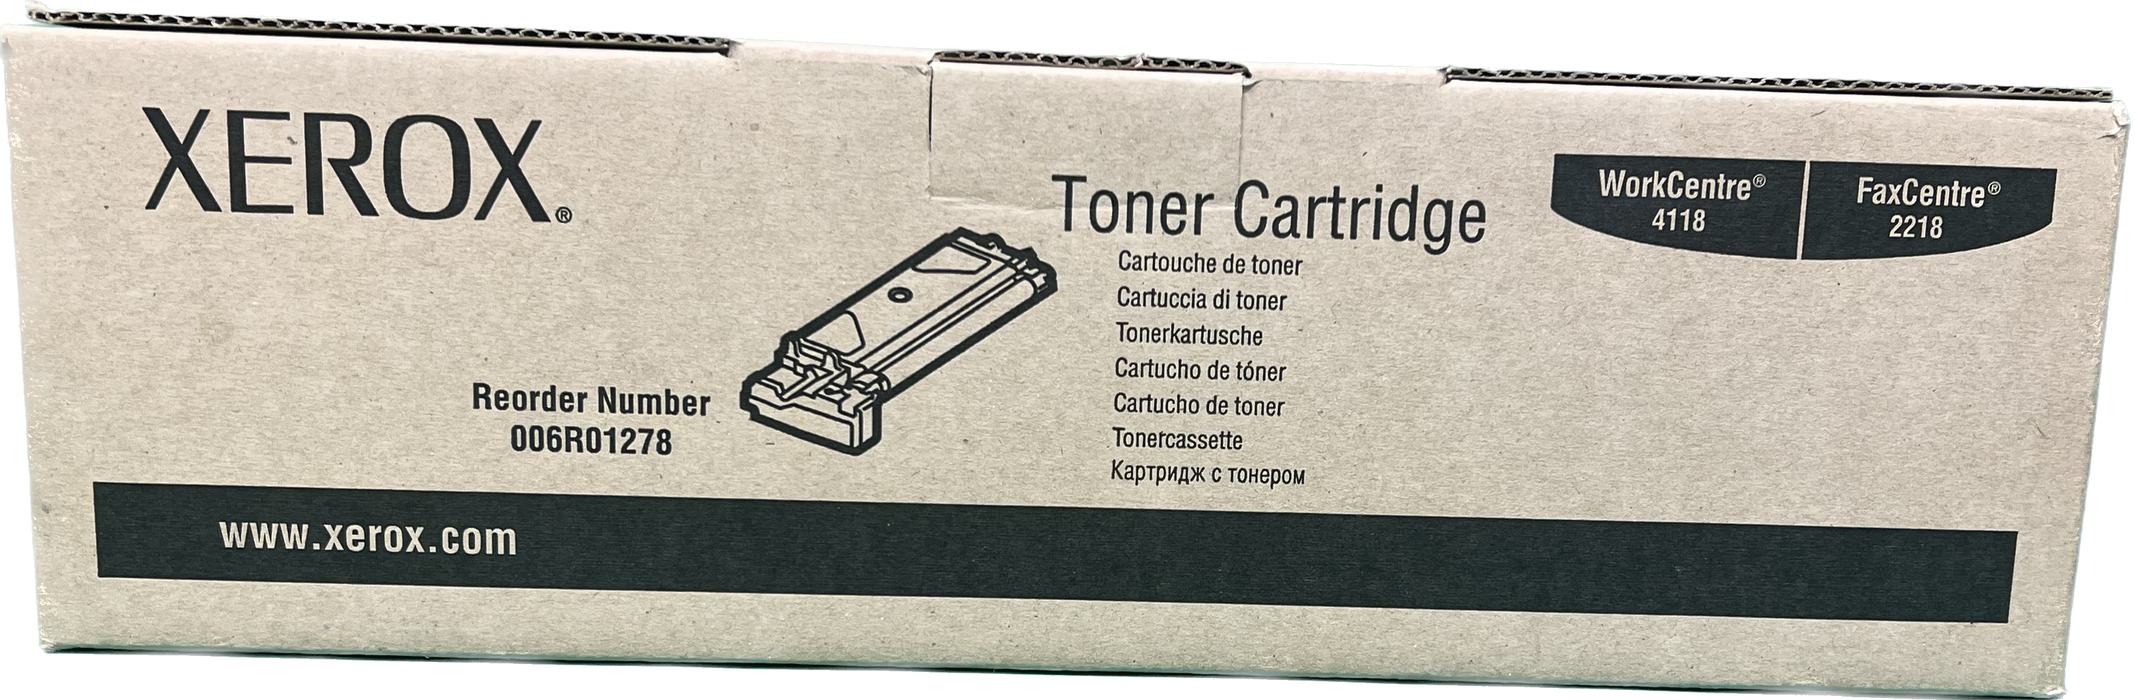 Genuine Xerox Black Toner Cartridge | OEM 006R01278 | Xerox Work Centre 4118, Fax Centre 2218